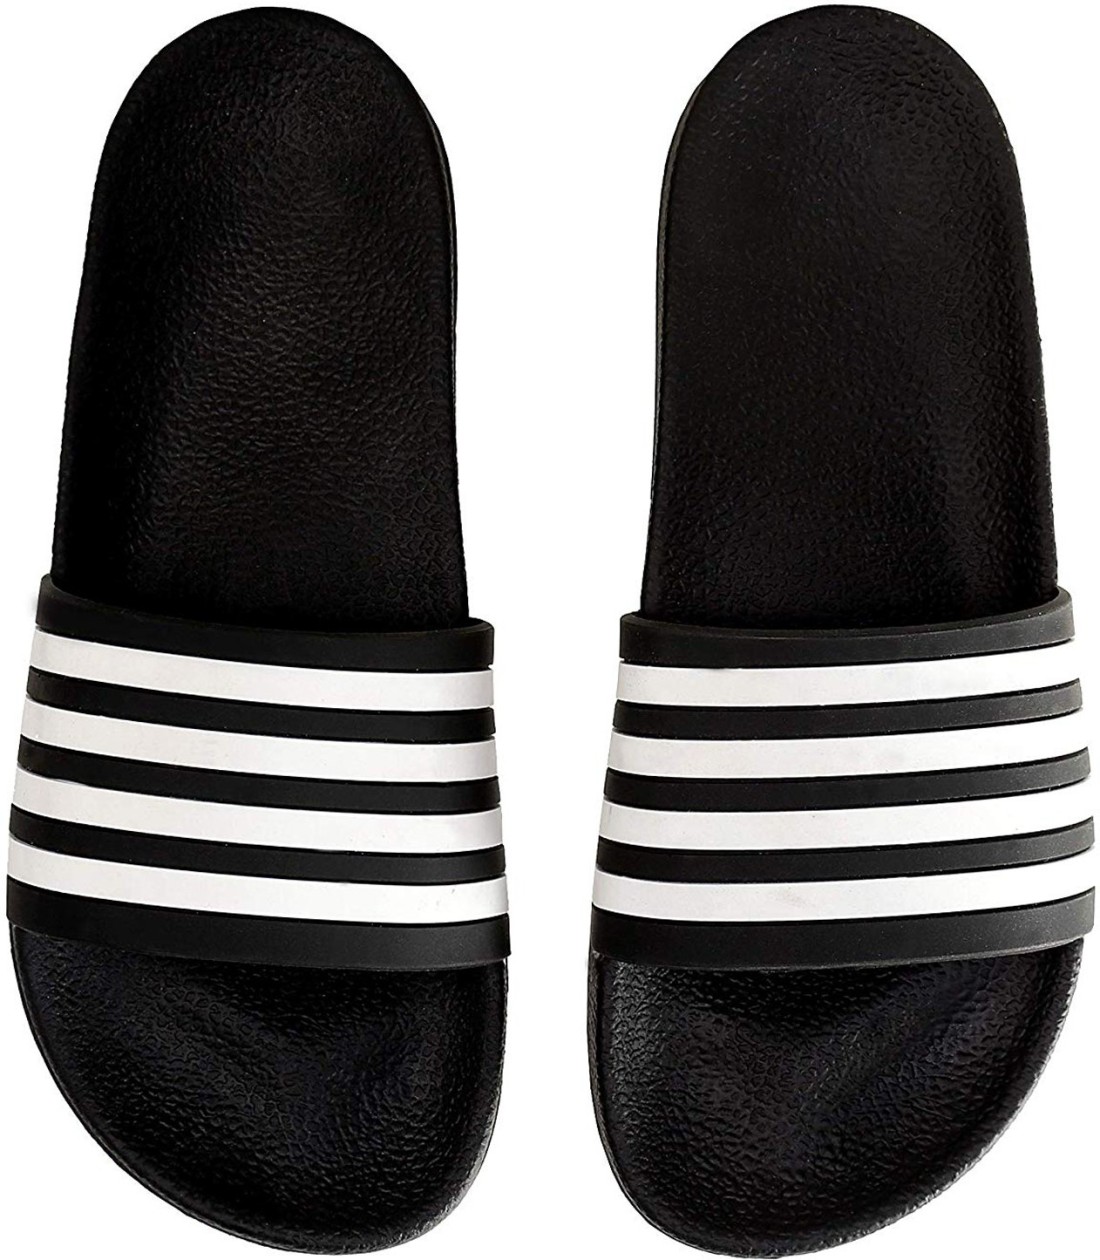 flip flop slippers for boys